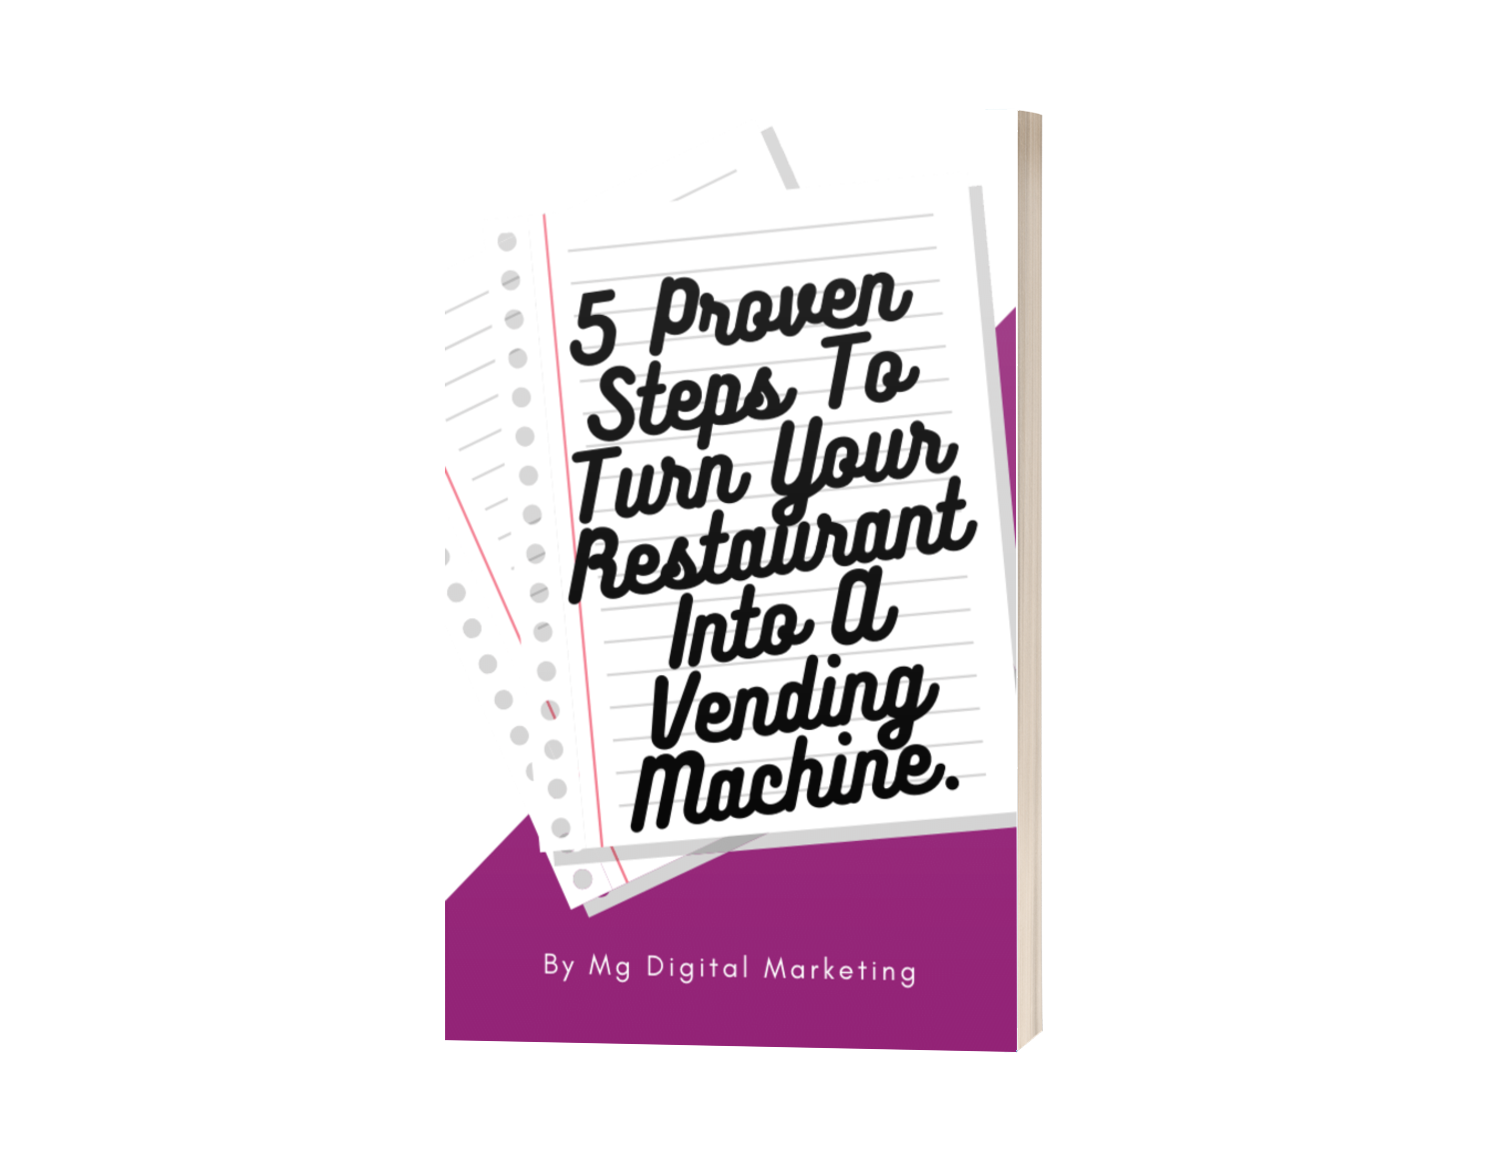 5 proven steps